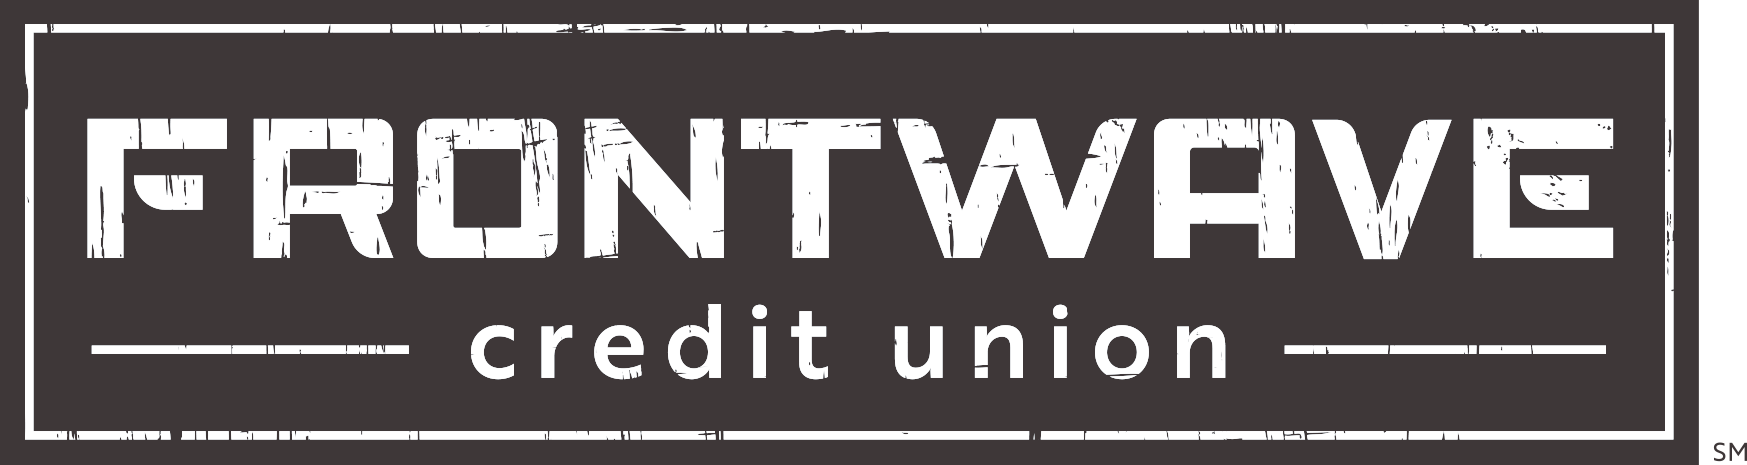 Frontwave Credit Union